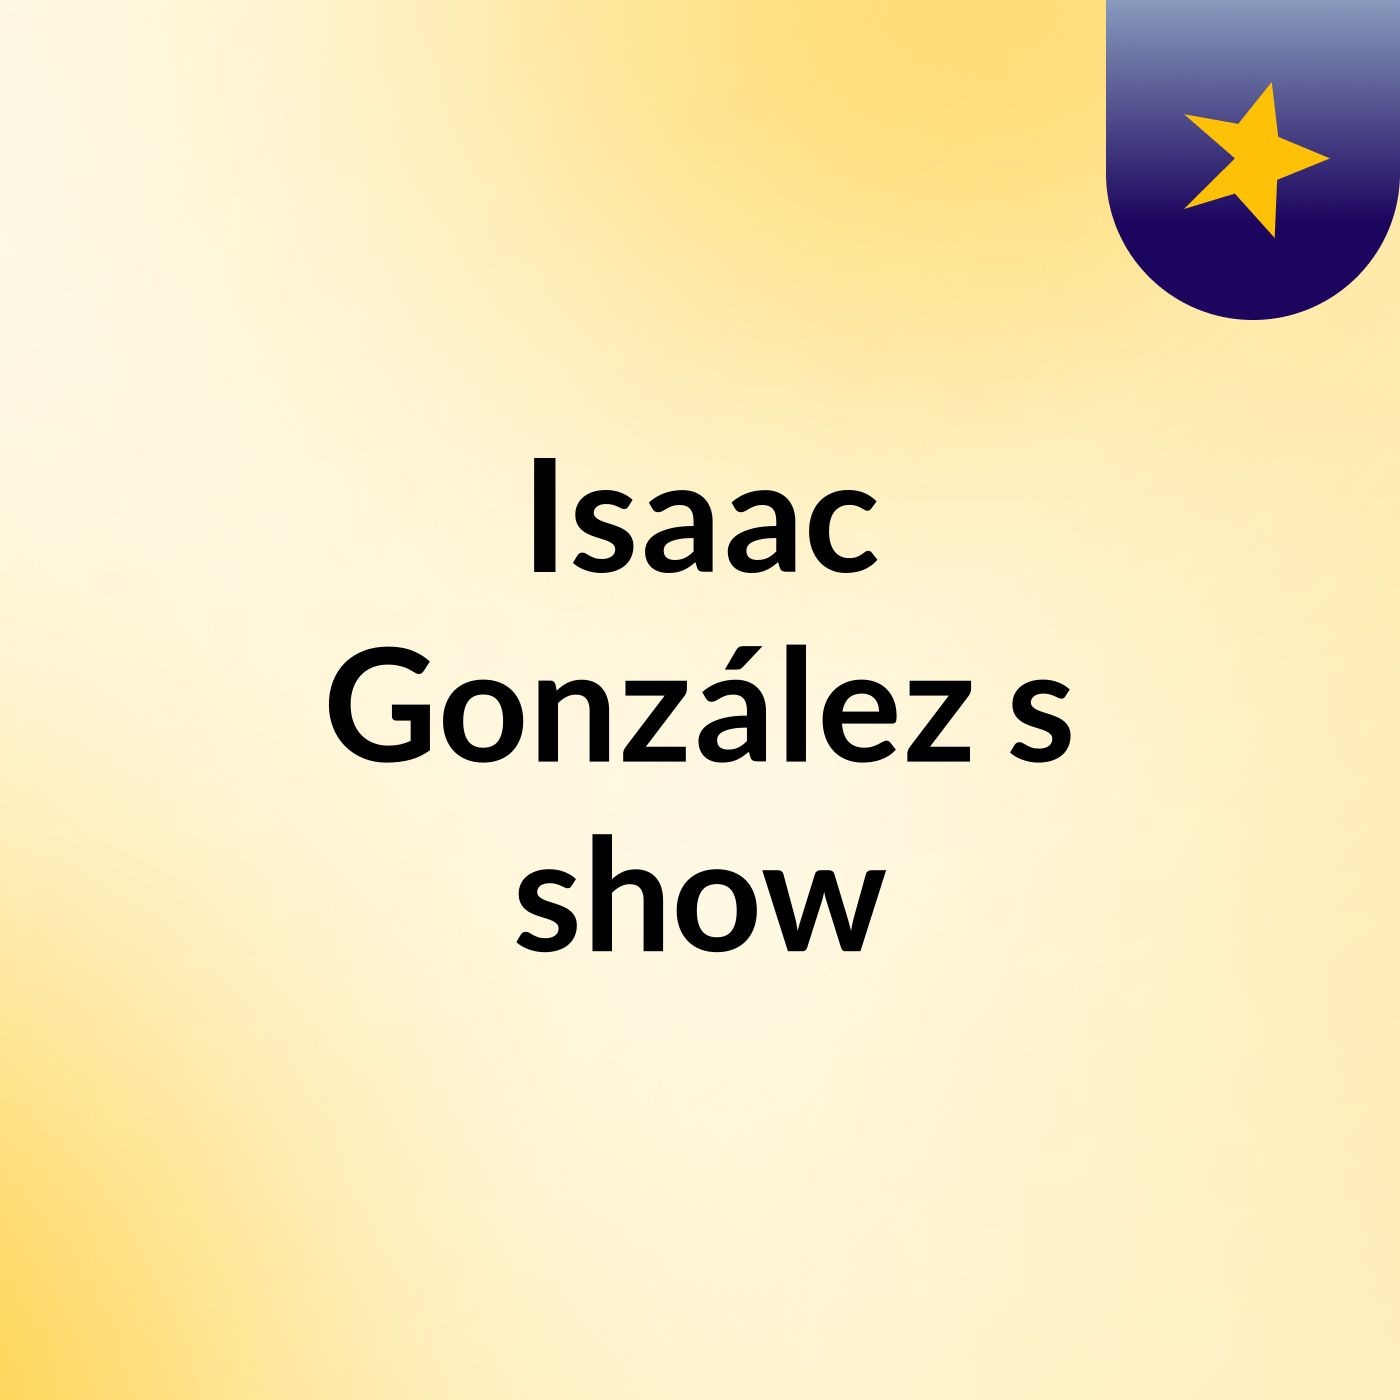 Isaac González's show